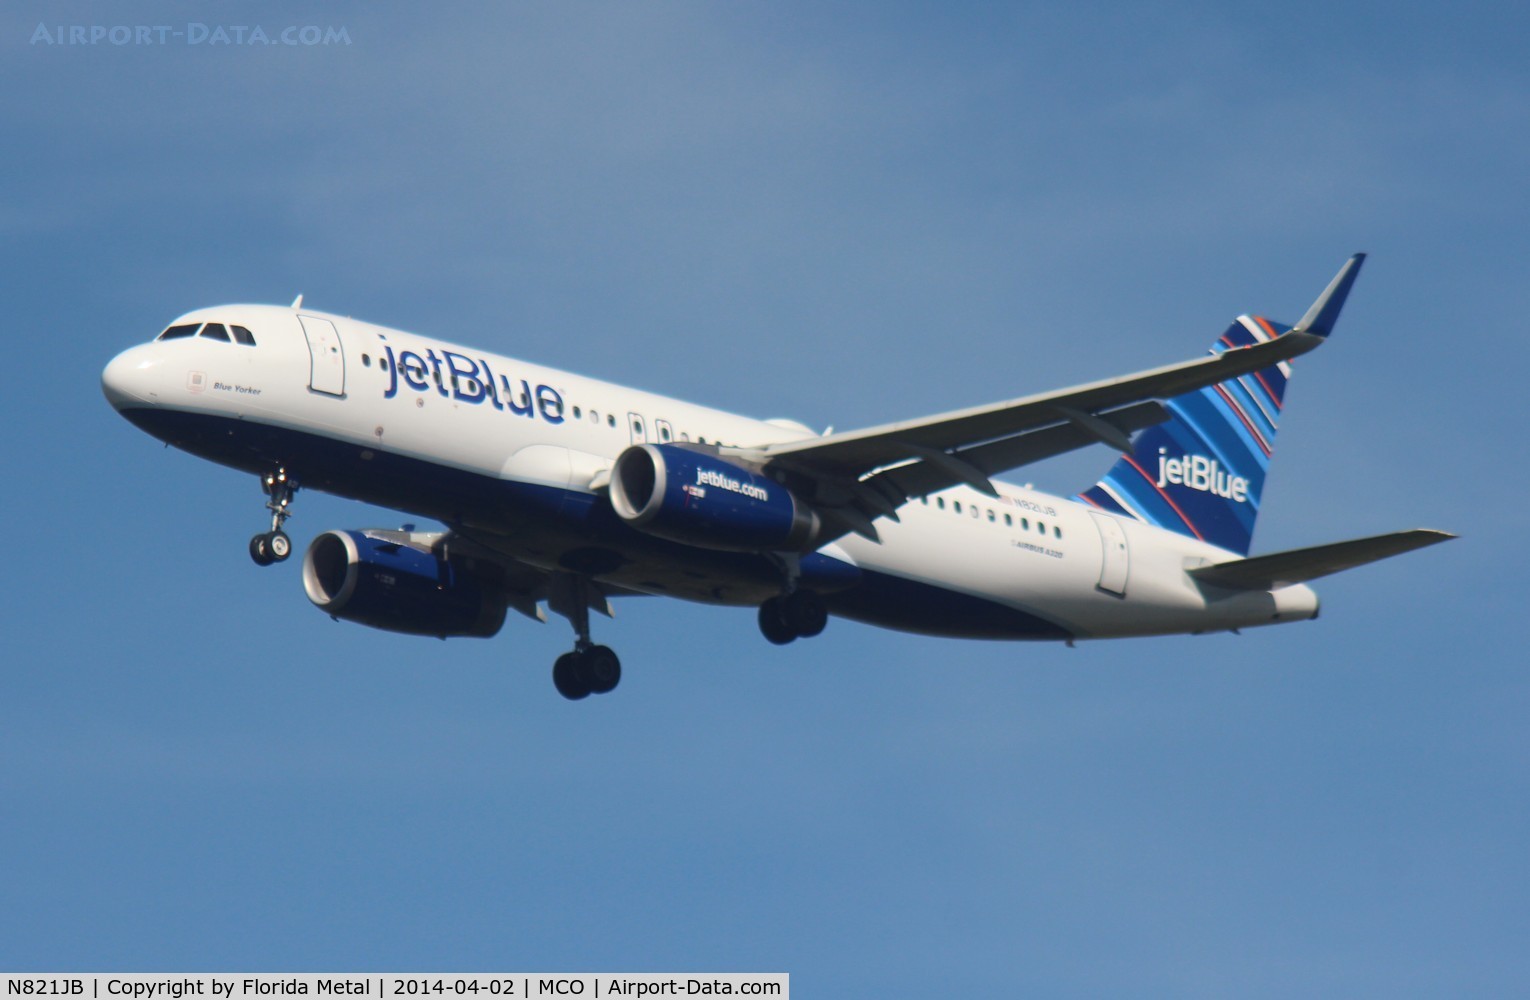 N821JB, 2012 Airbus A320-232 C/N 5417, Jet Blue